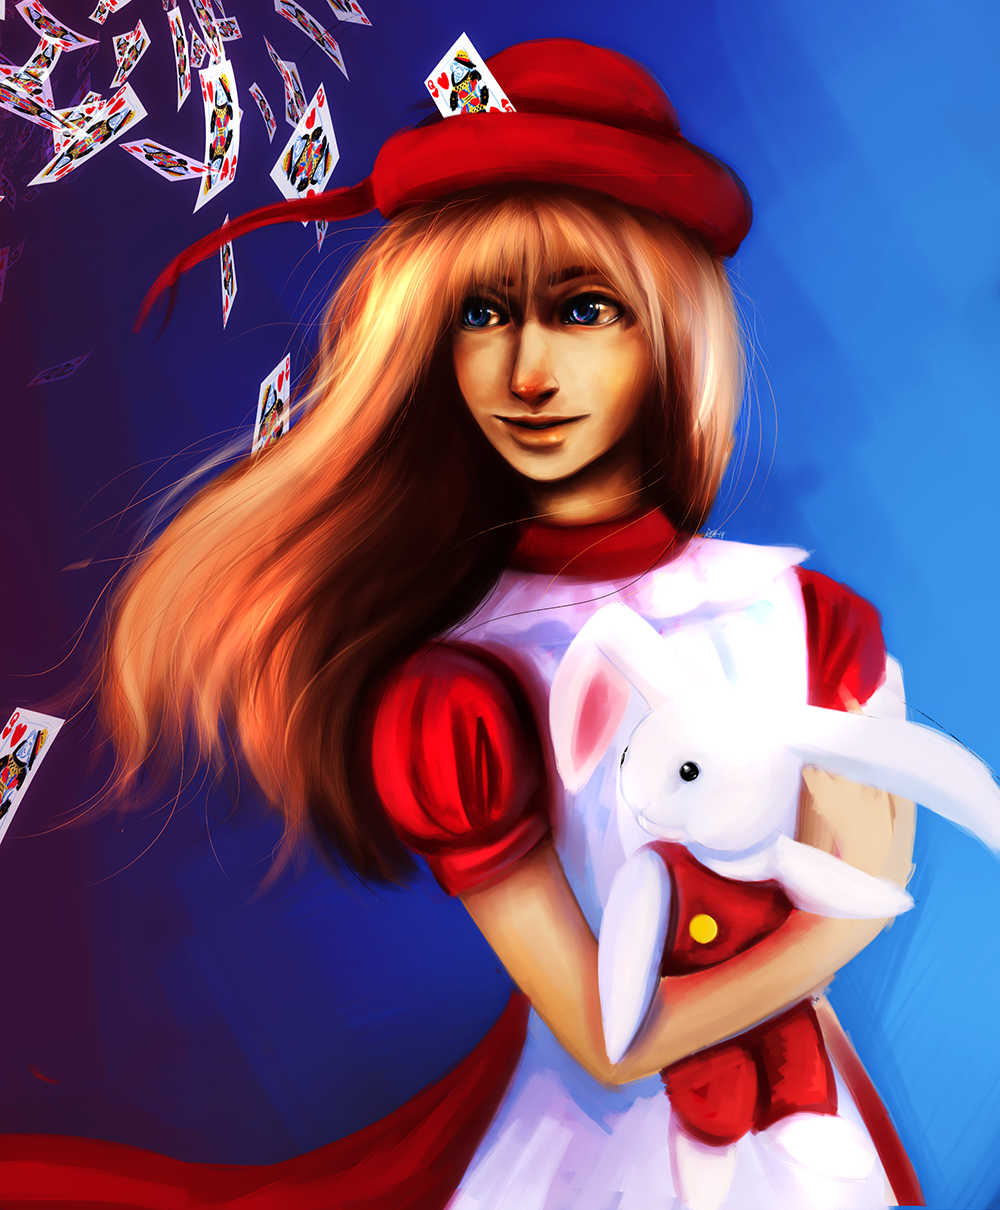 The Bunny Алиса. Алиса tinny. Алиса Тини Банни. Tiny Bunny Алиса арт 18. Игры алисы 18